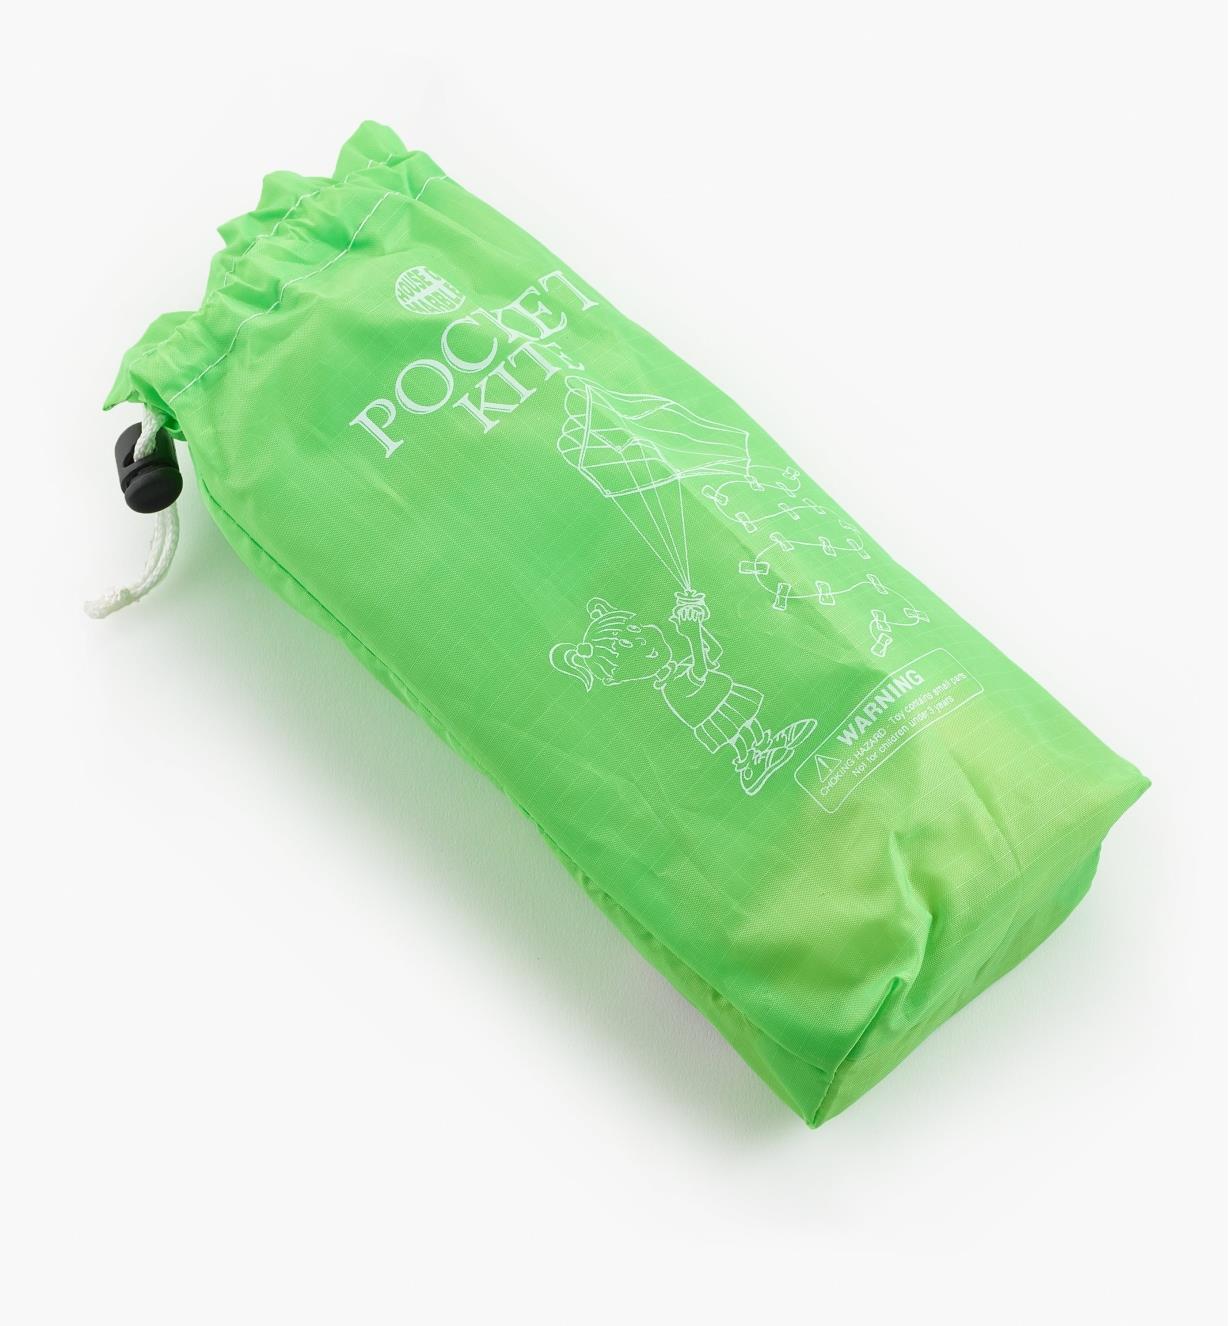 Pocket Kite folded into the included storage bag